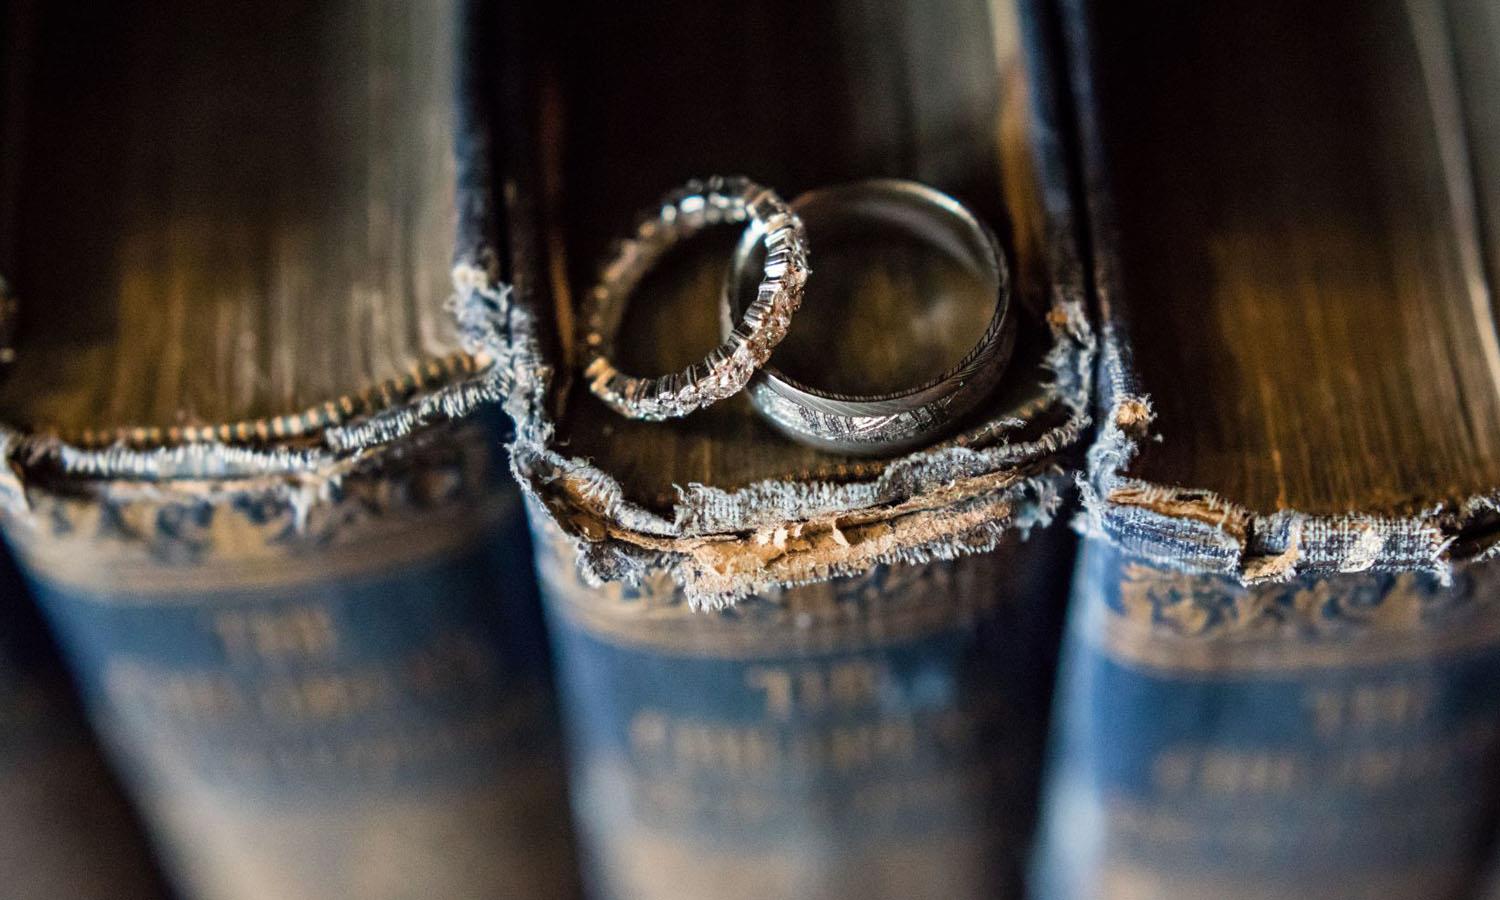 Wedding rings on books